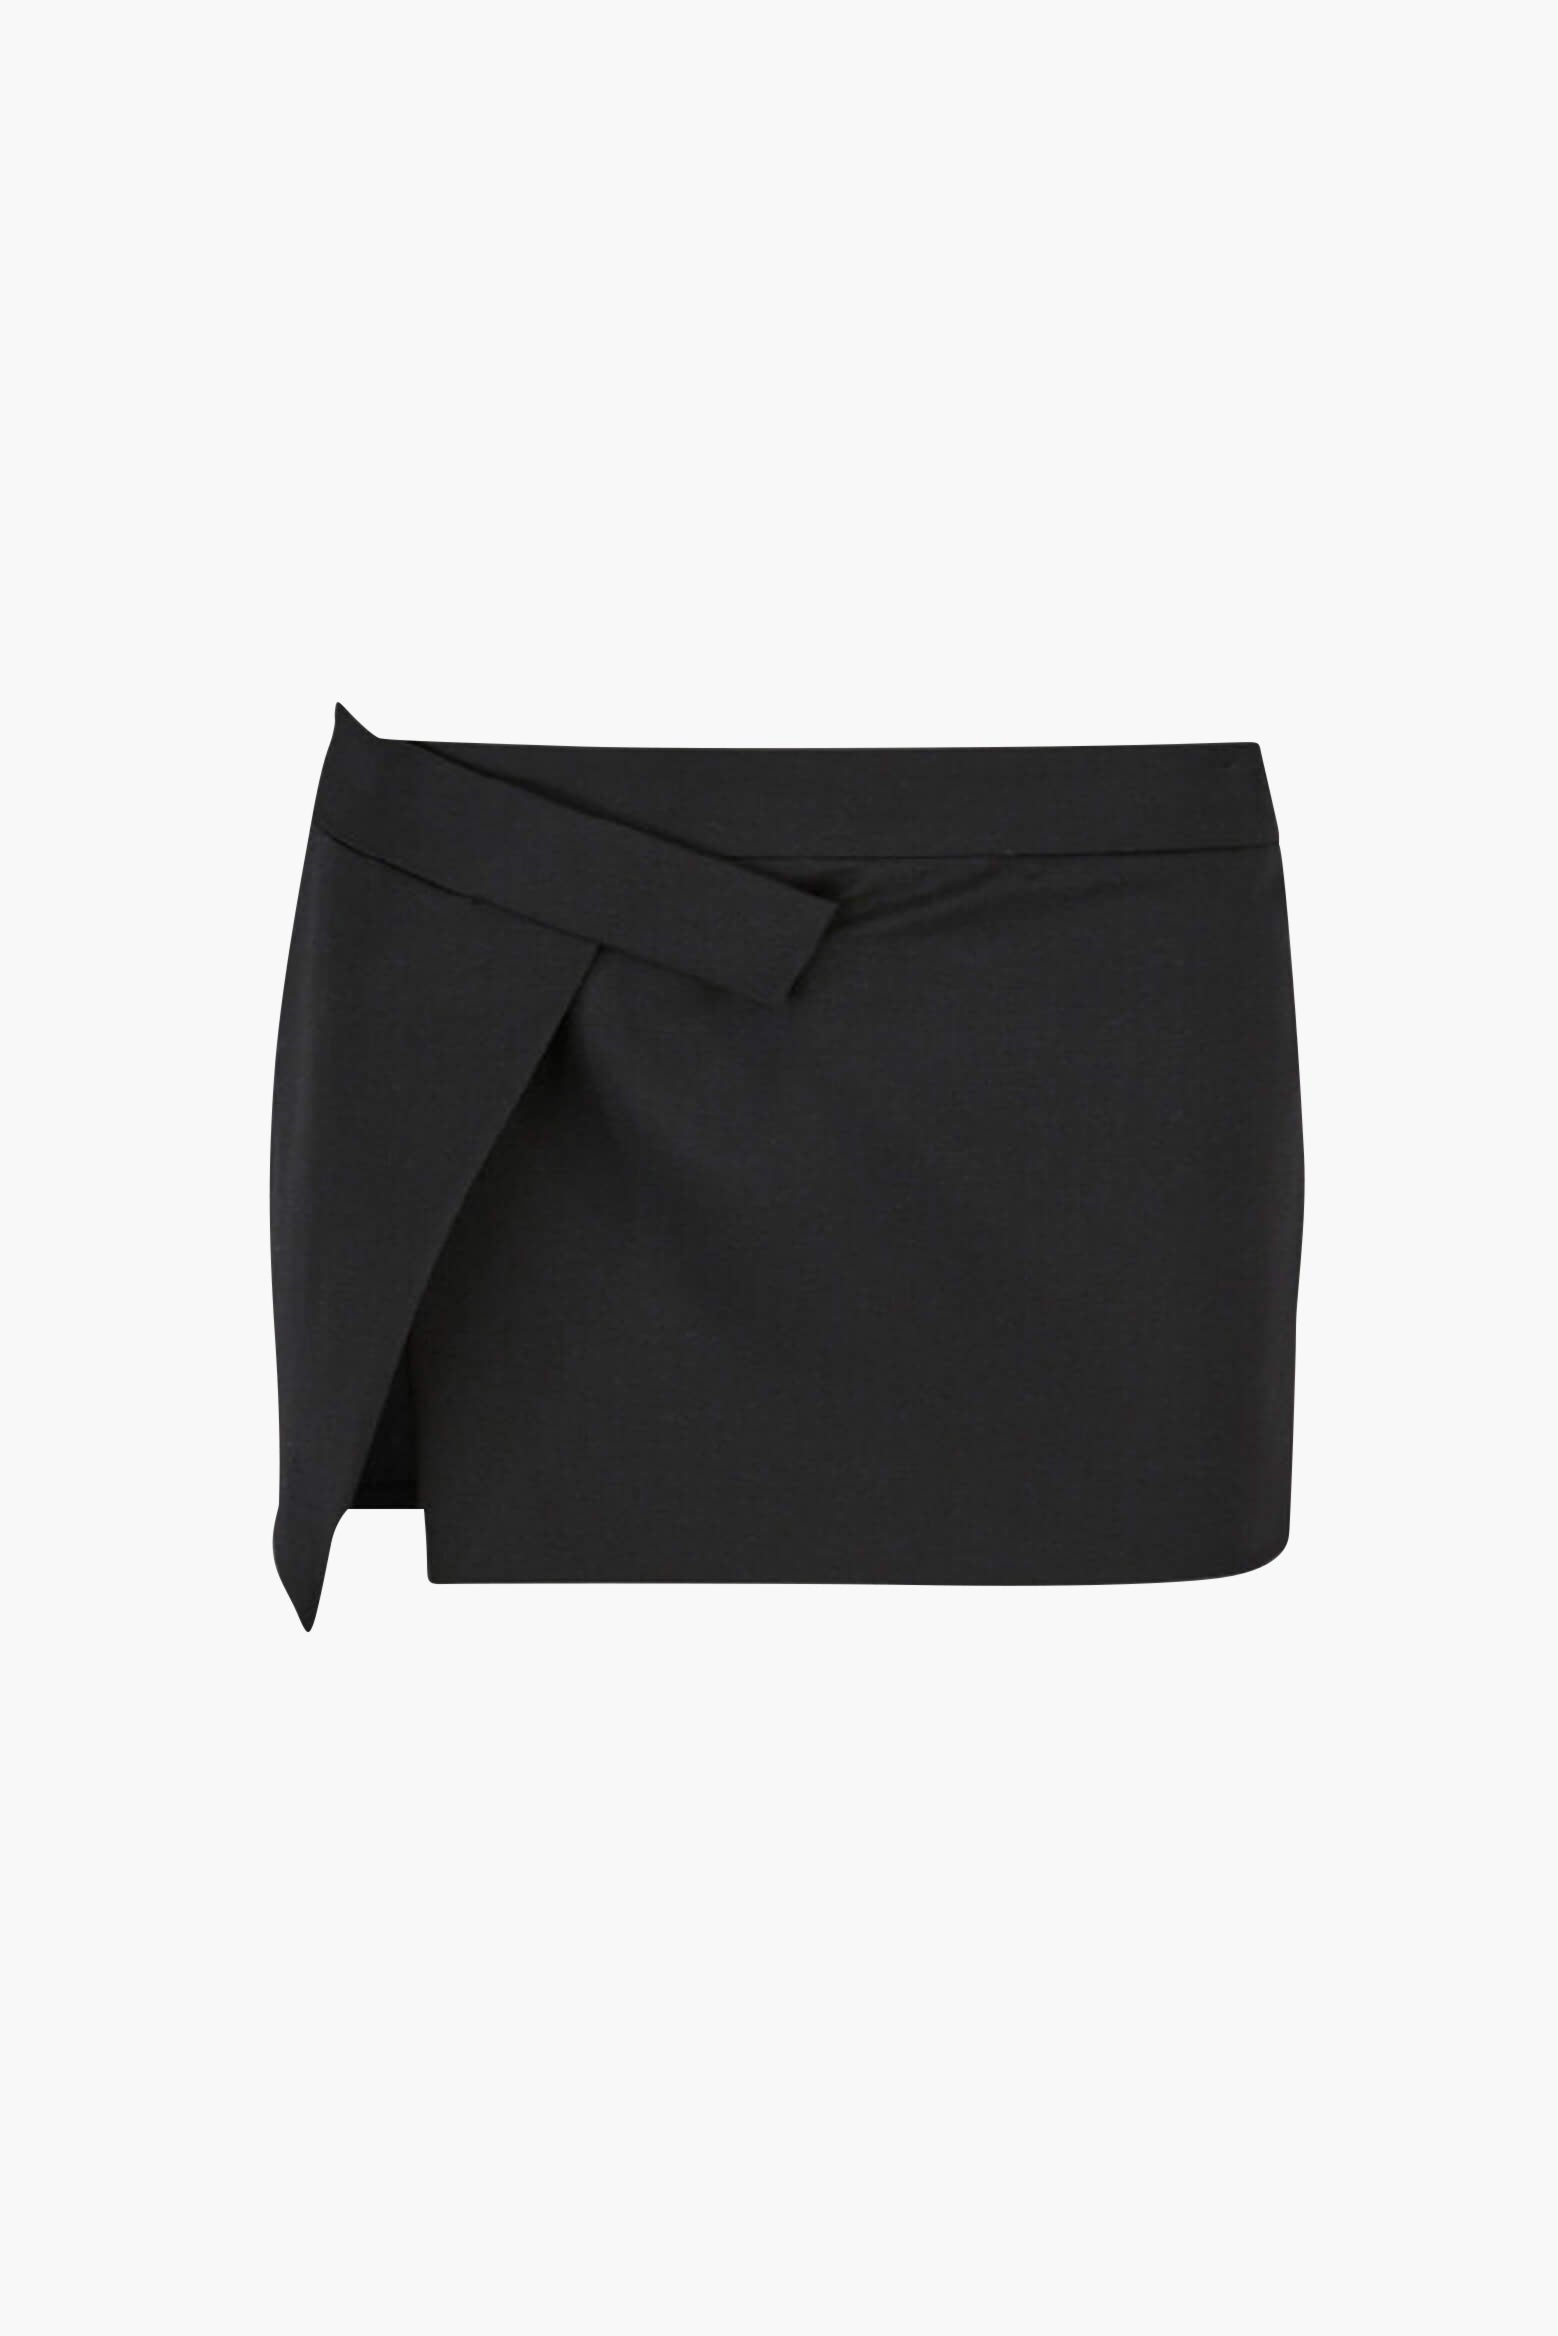 The-Attico-Chloe-Mini-Skirt-Black-The-New-Trend-Default